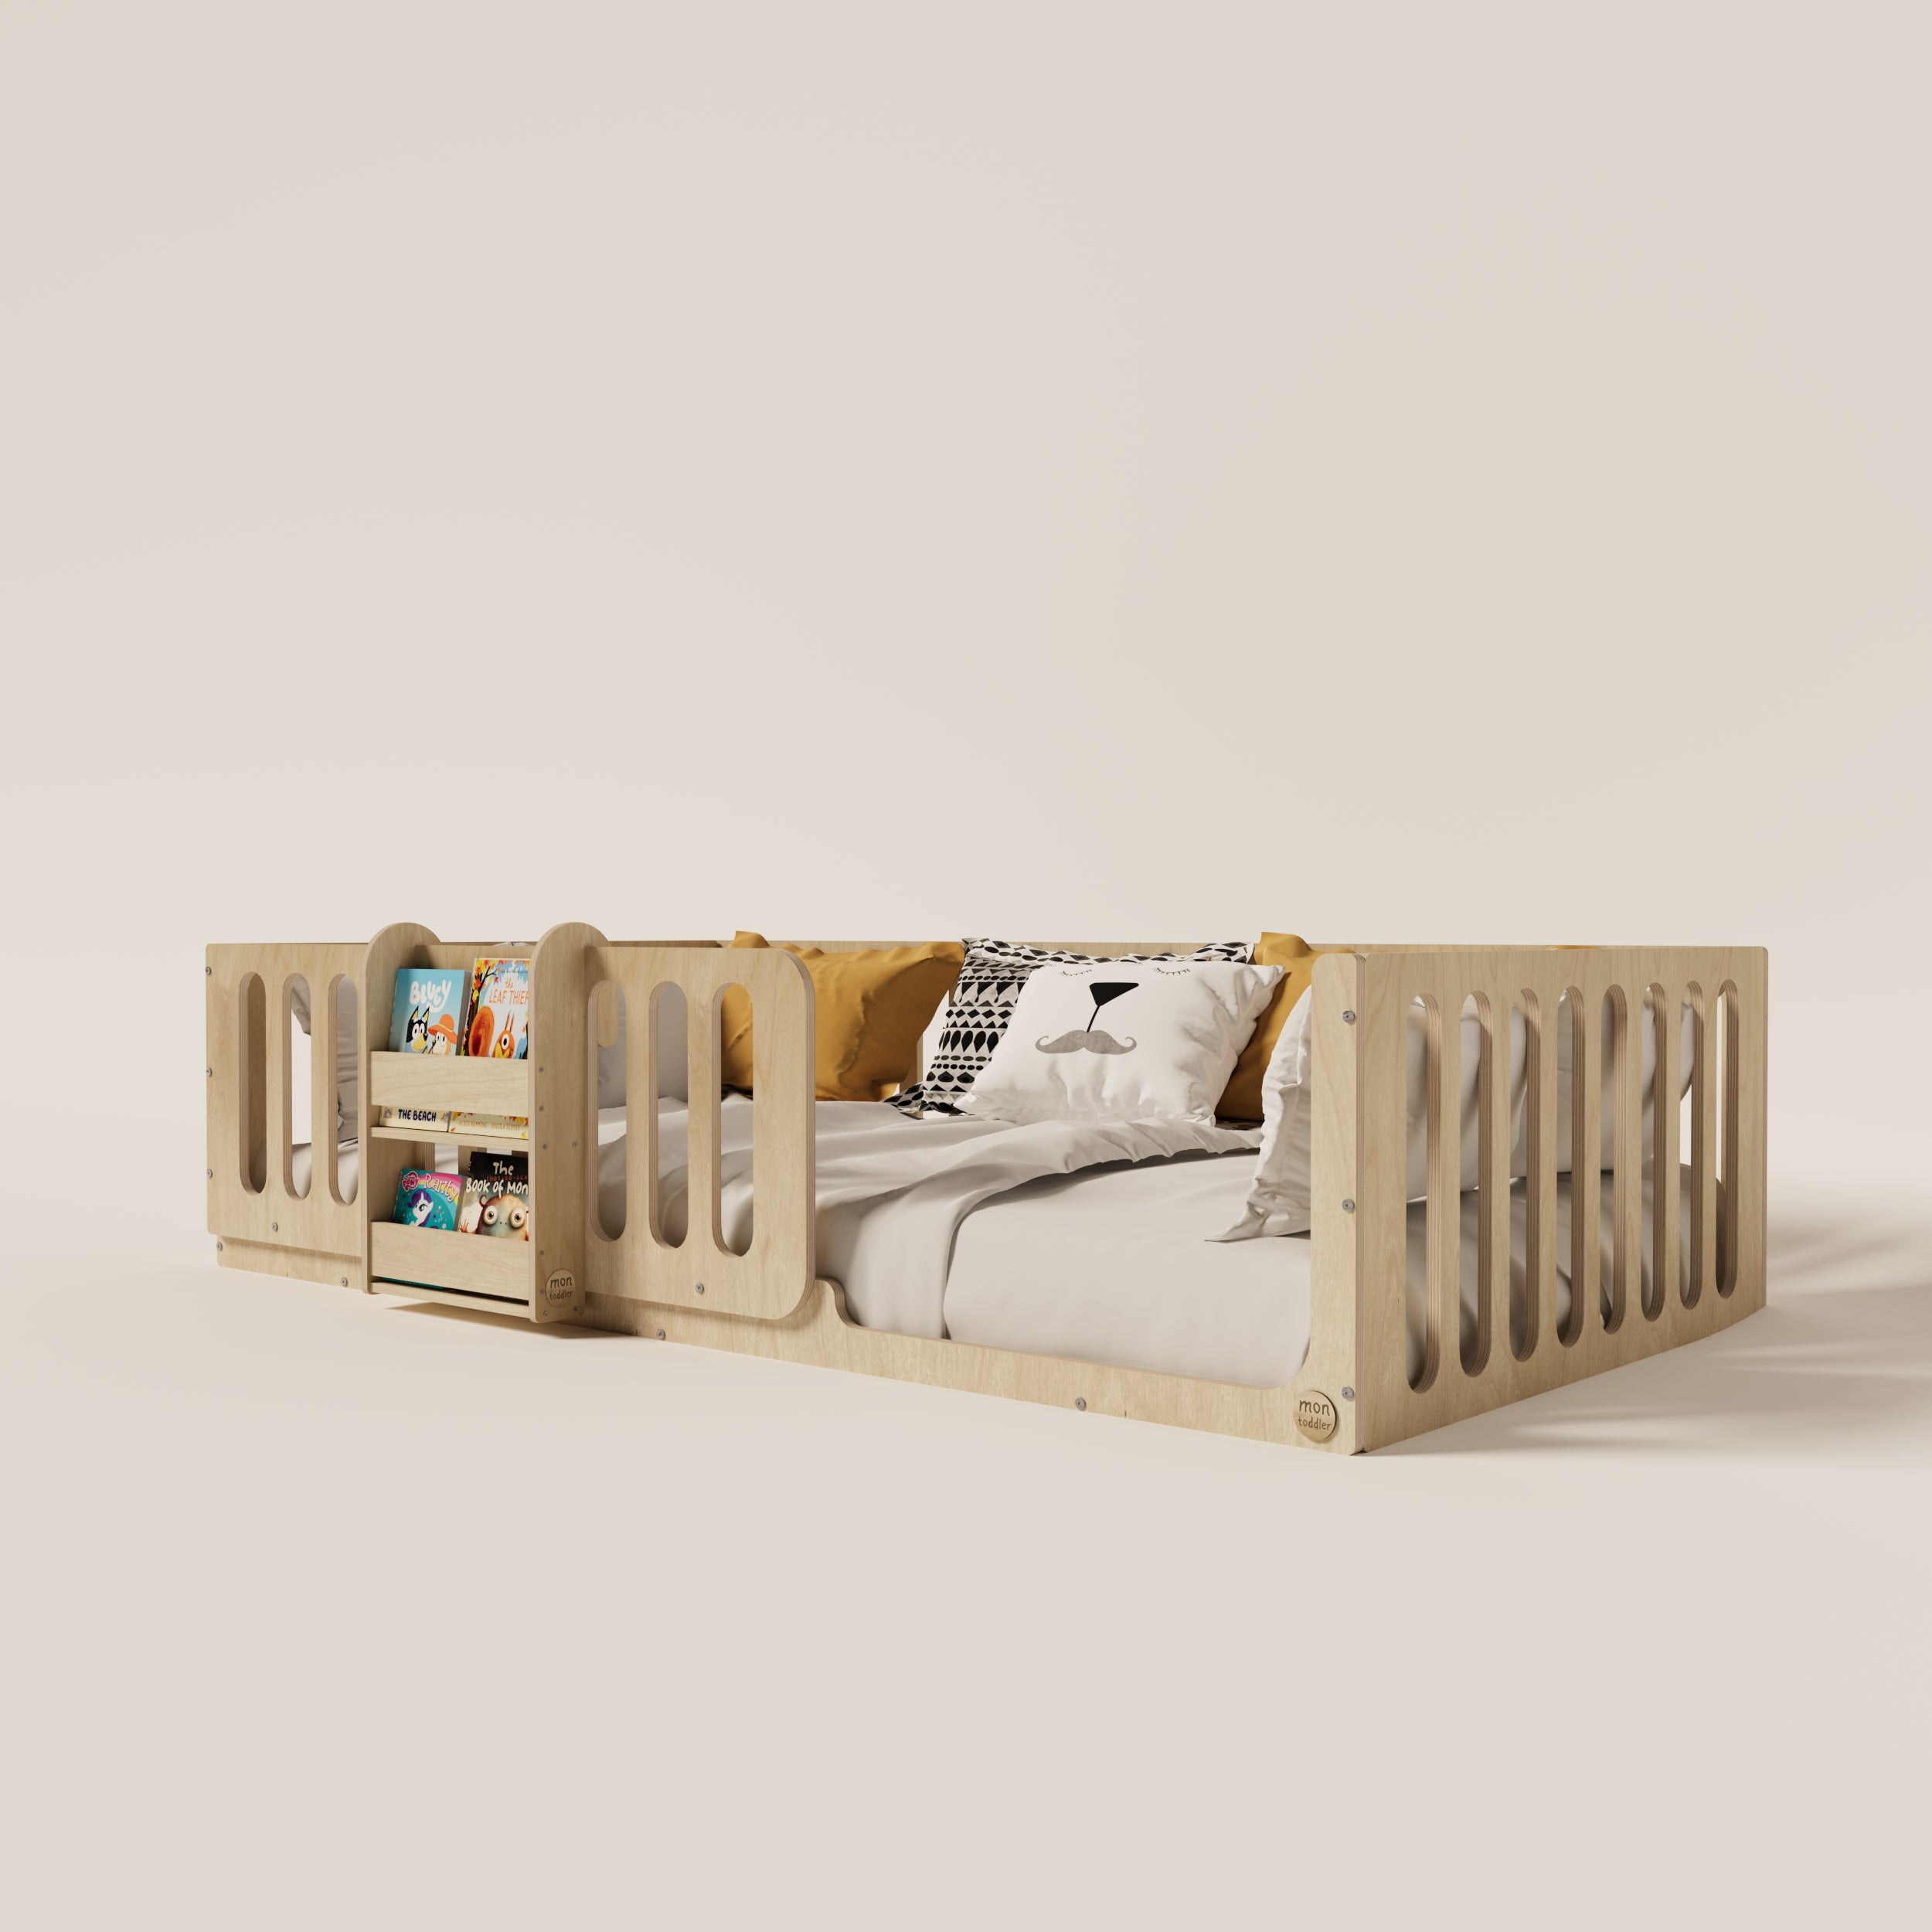 Montessori Floor Bed with Bookshelf - Montoddler 